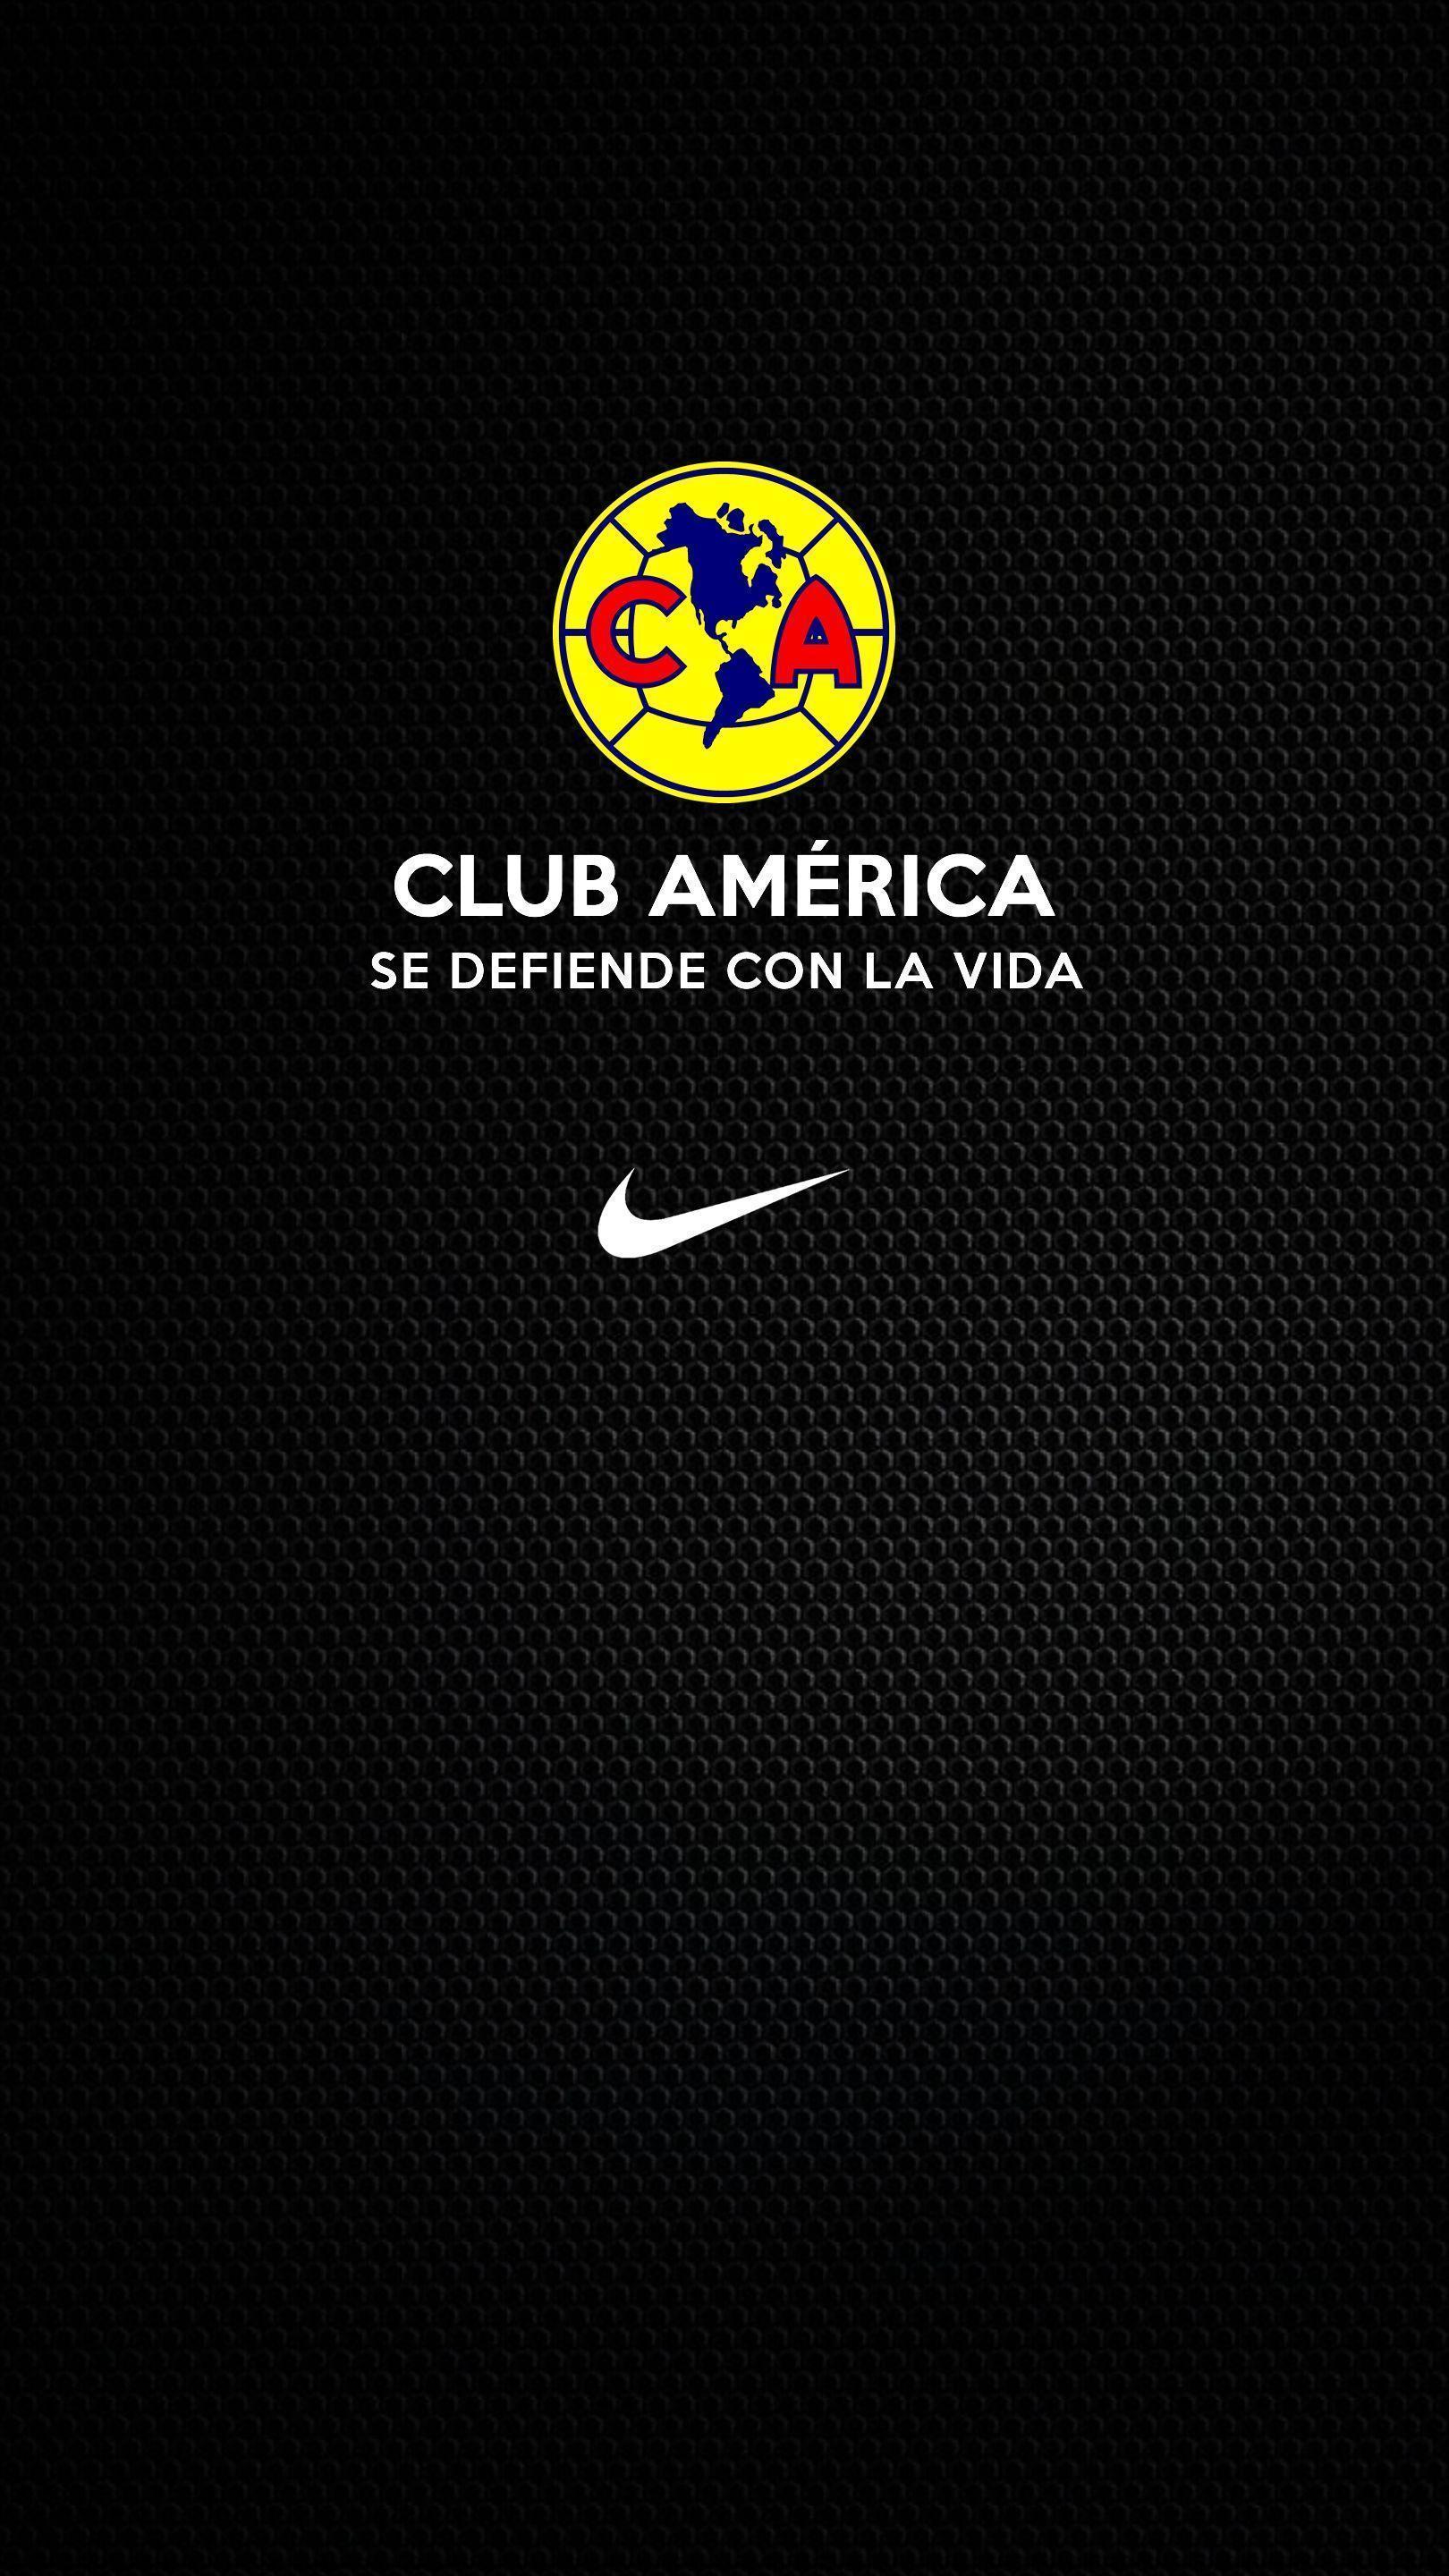 Club America 2015 Logo 85388